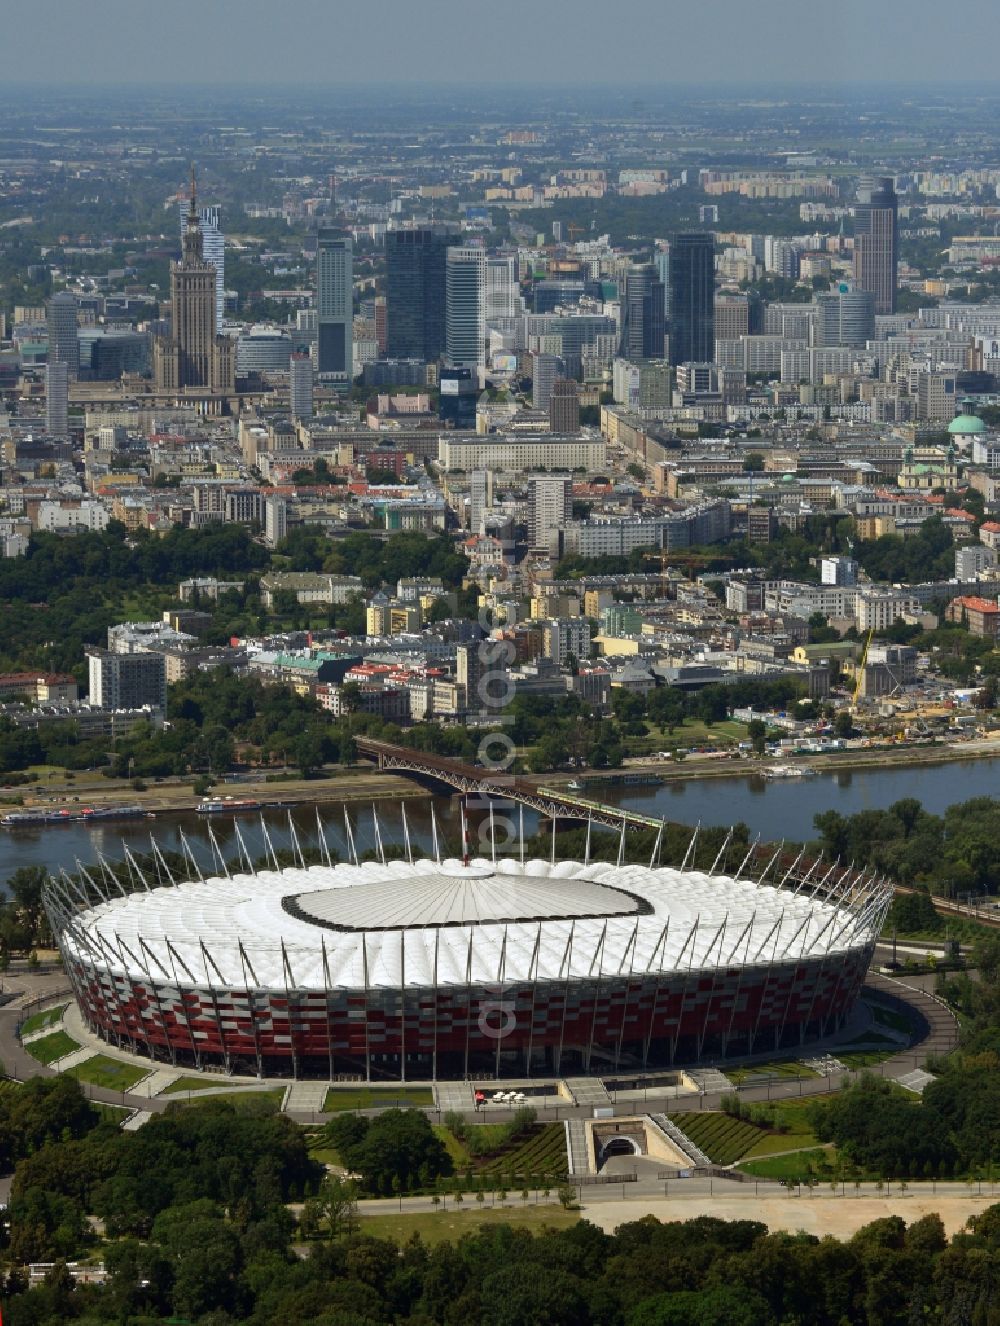 Warschau from above - The new built stadium National Stadium in Warsaw bevore opening EM 2012 in Poland